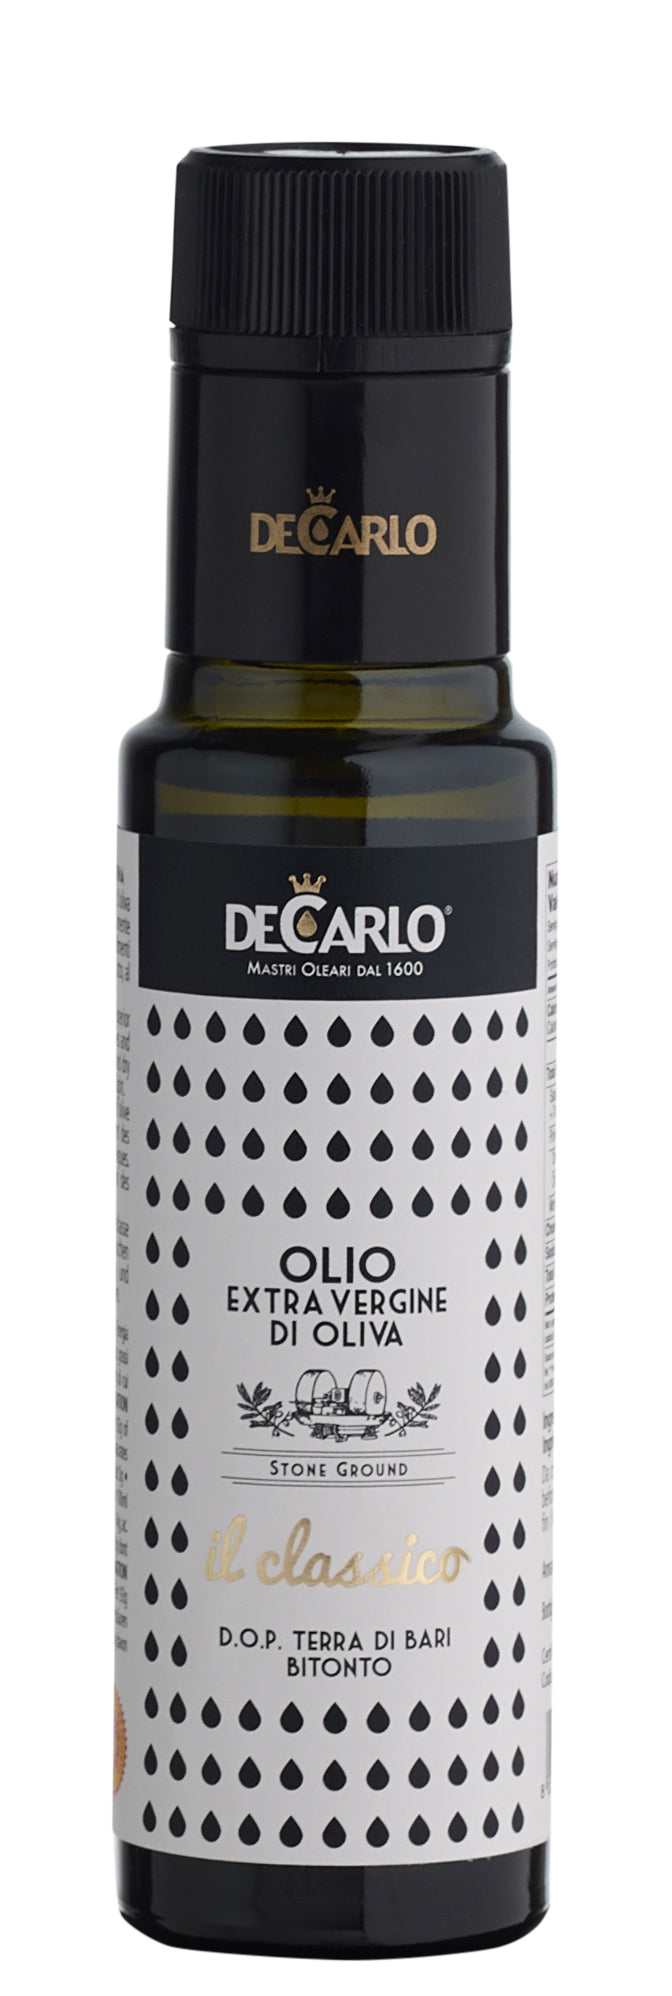 De Carlo Terra Di Bari Extra Virgin Olive Oil DOP - 100ml